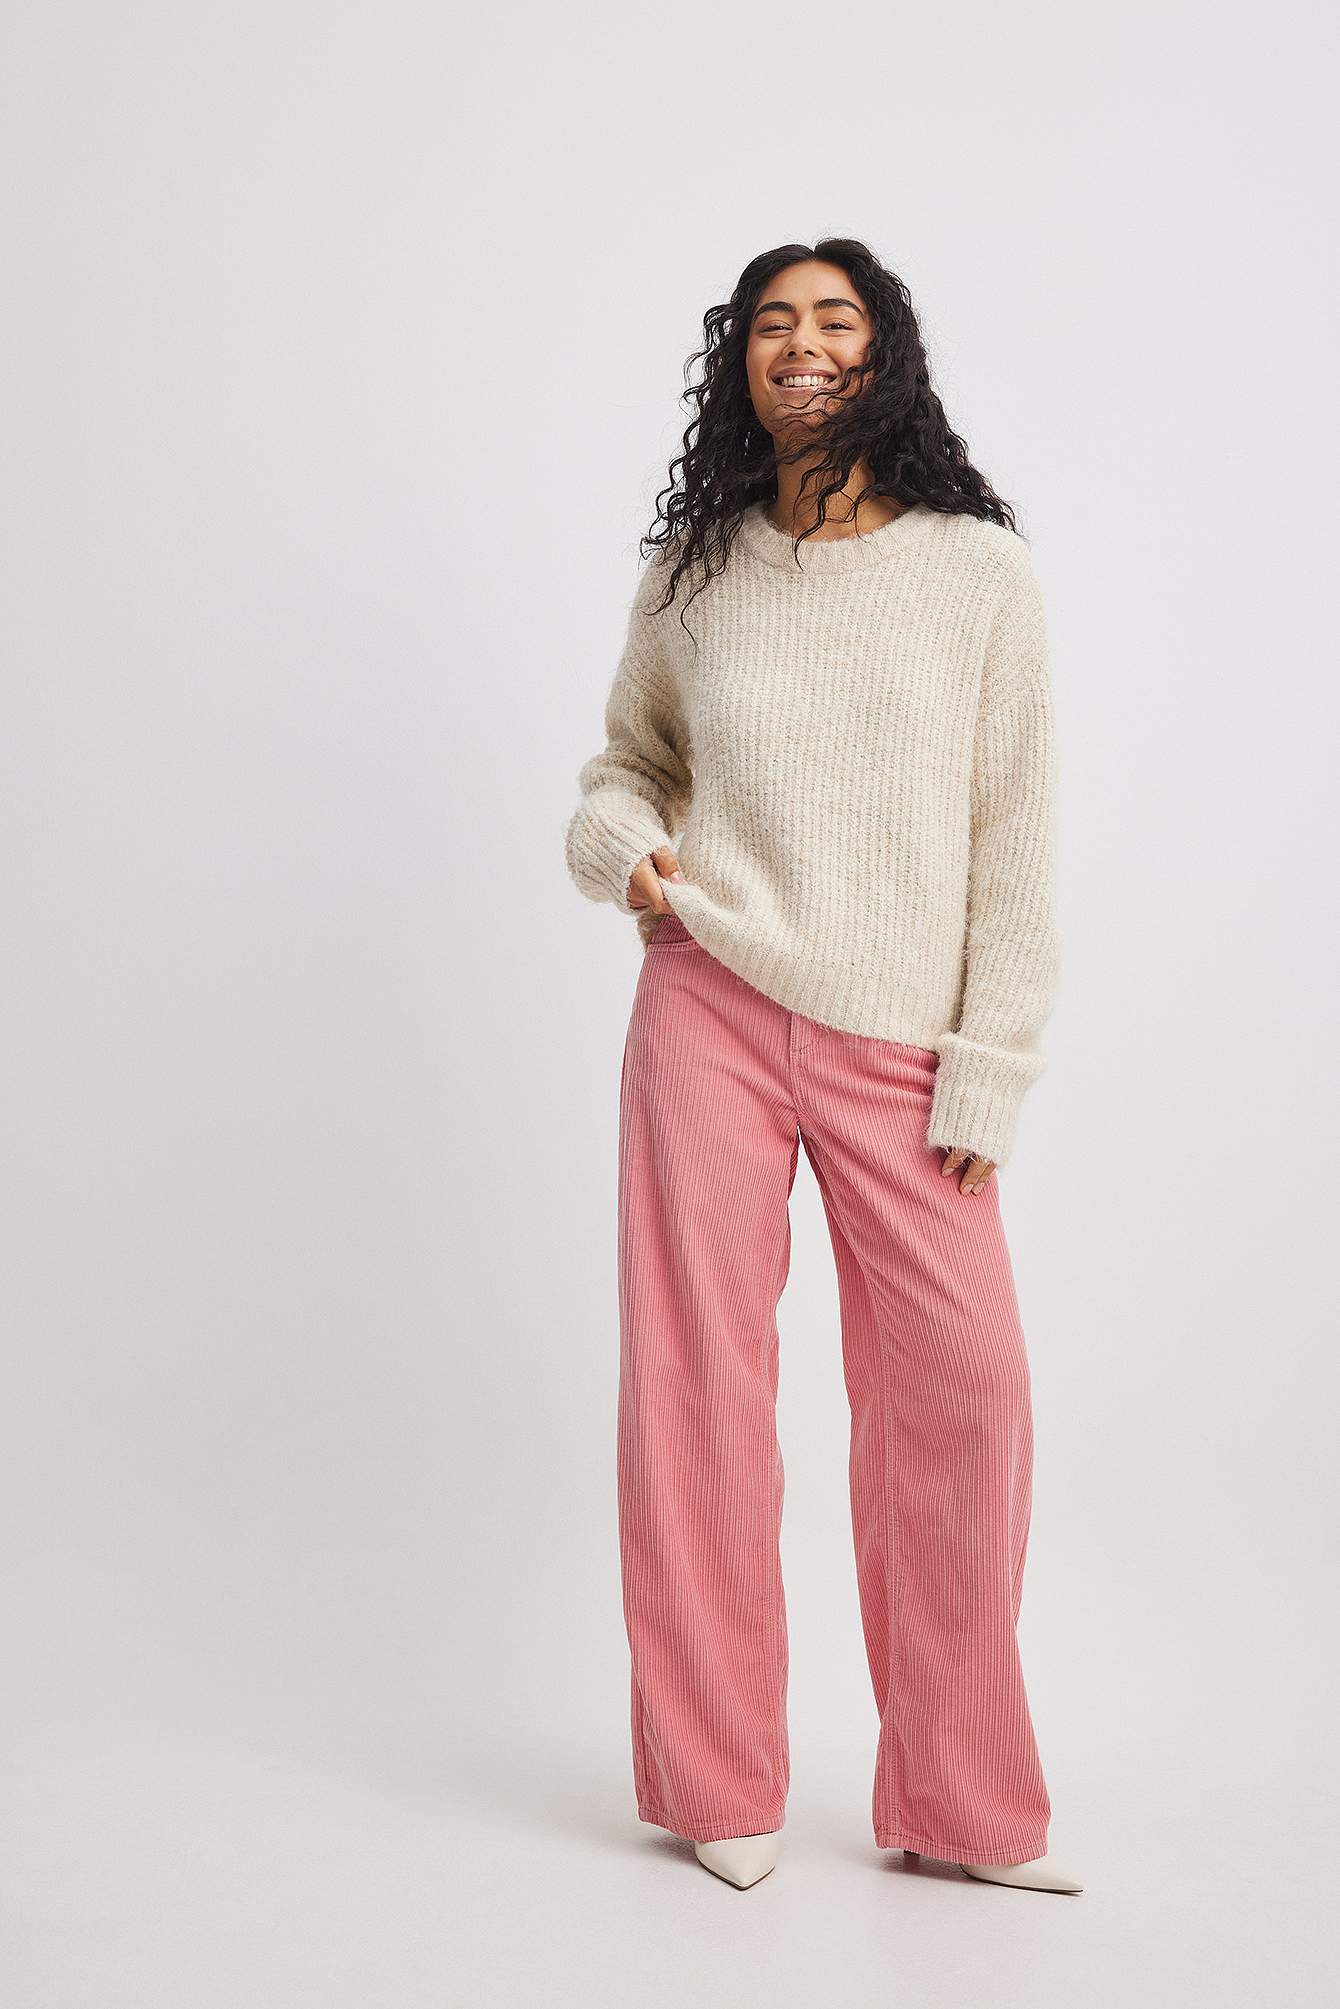 3) New Look Cerise Pink Wide Leg Culotte/ Trousers Size 6 | eBay